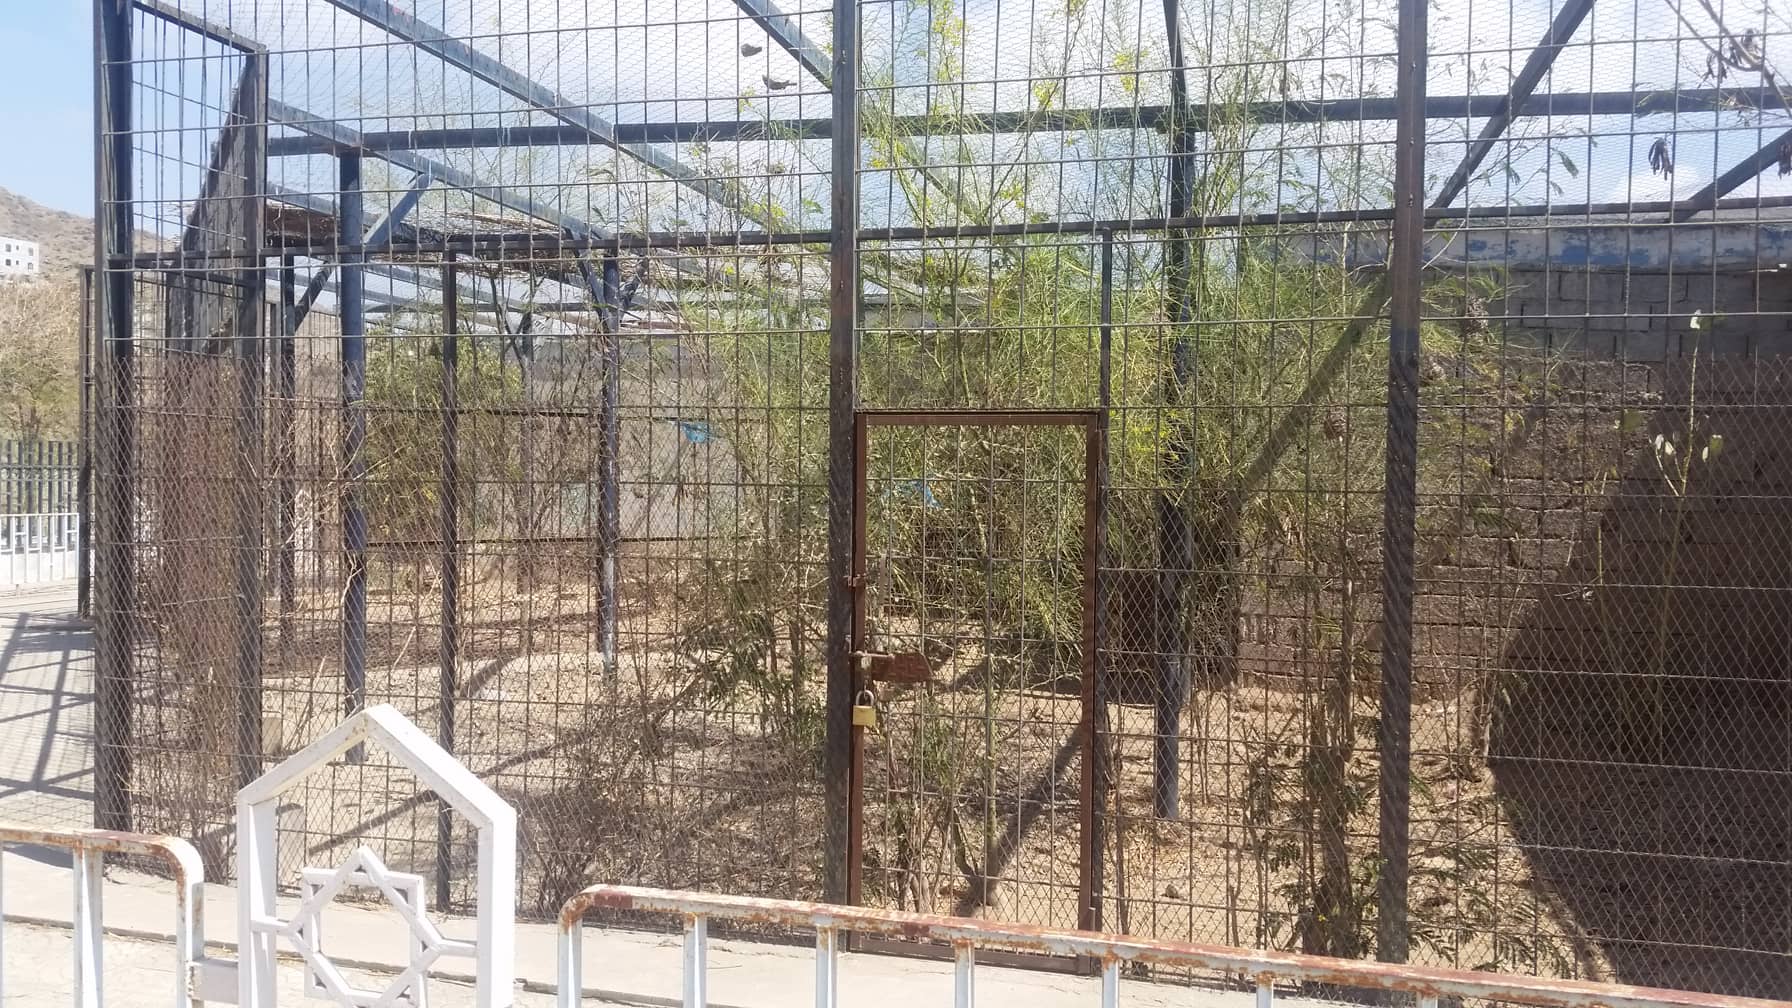 taiz 9 FEB 2019 OWAP-AR copywrite zoo yemen outside enclosure.jpg